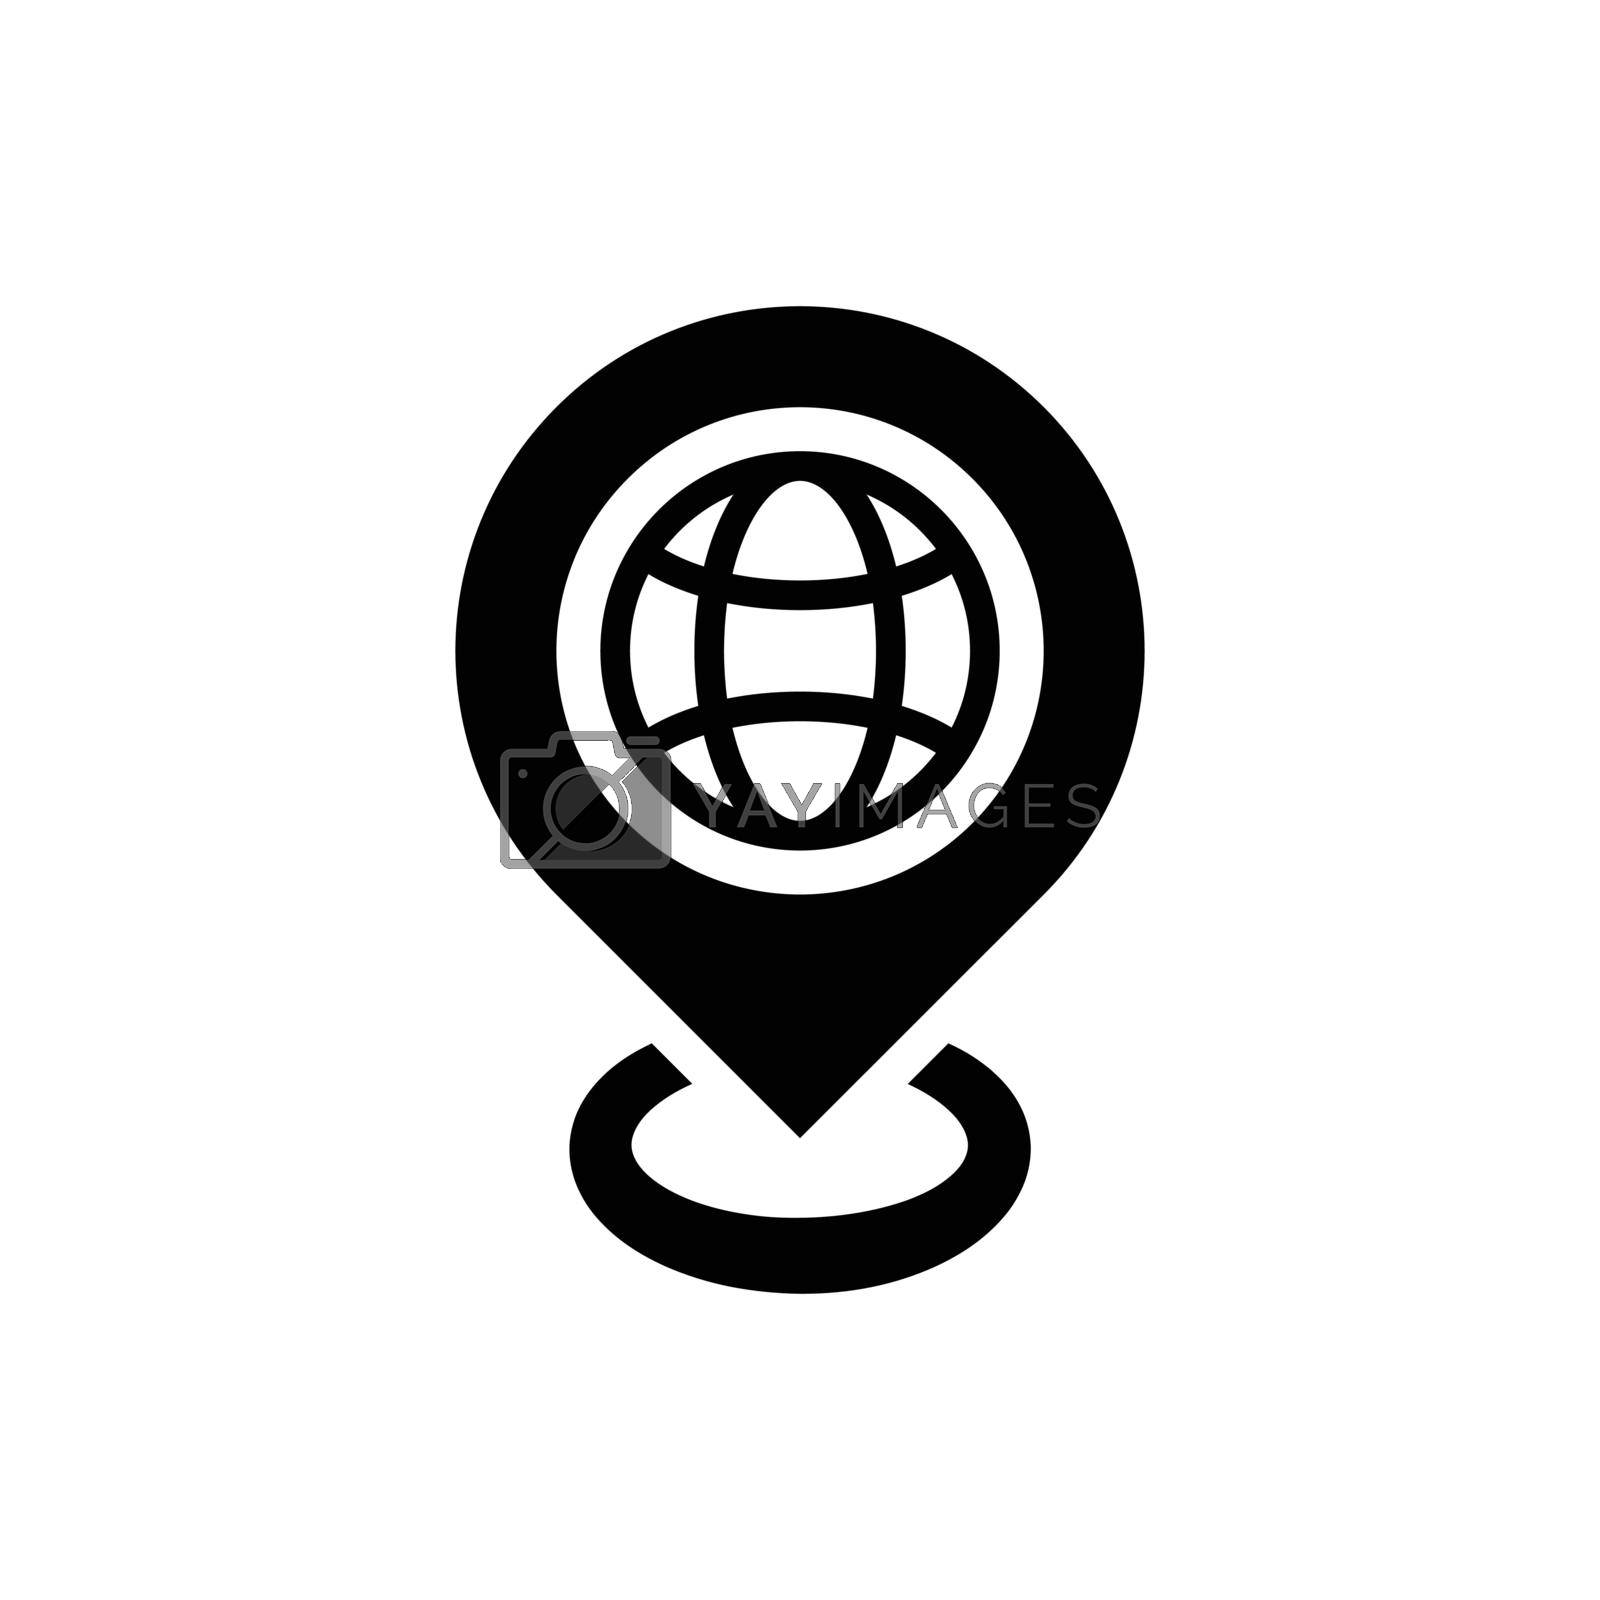 Travel destination icon